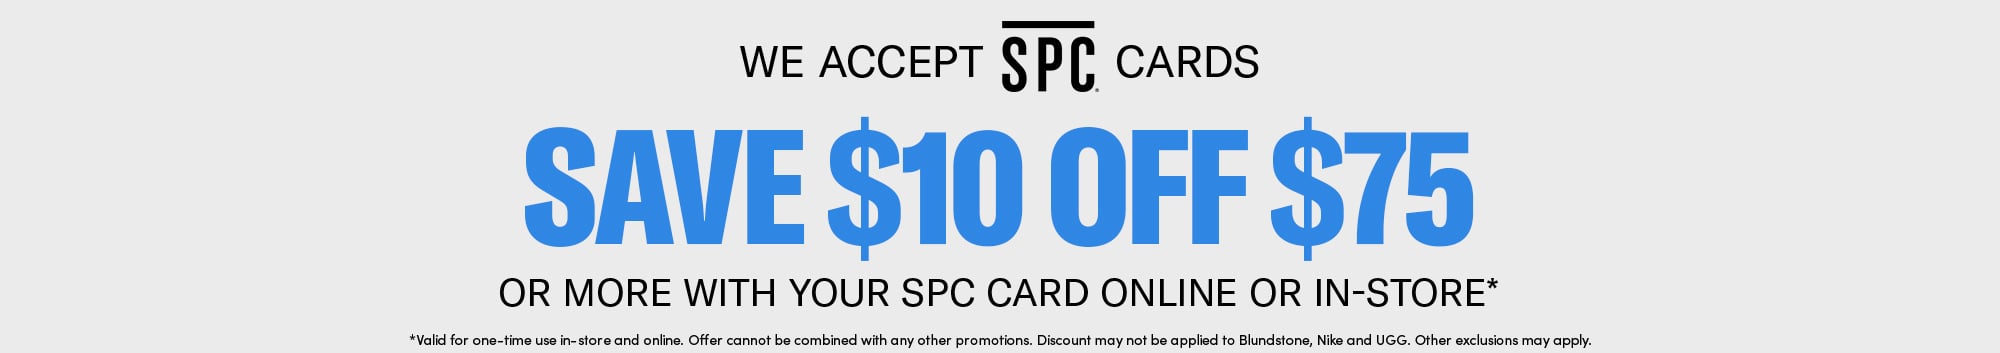 SPC card